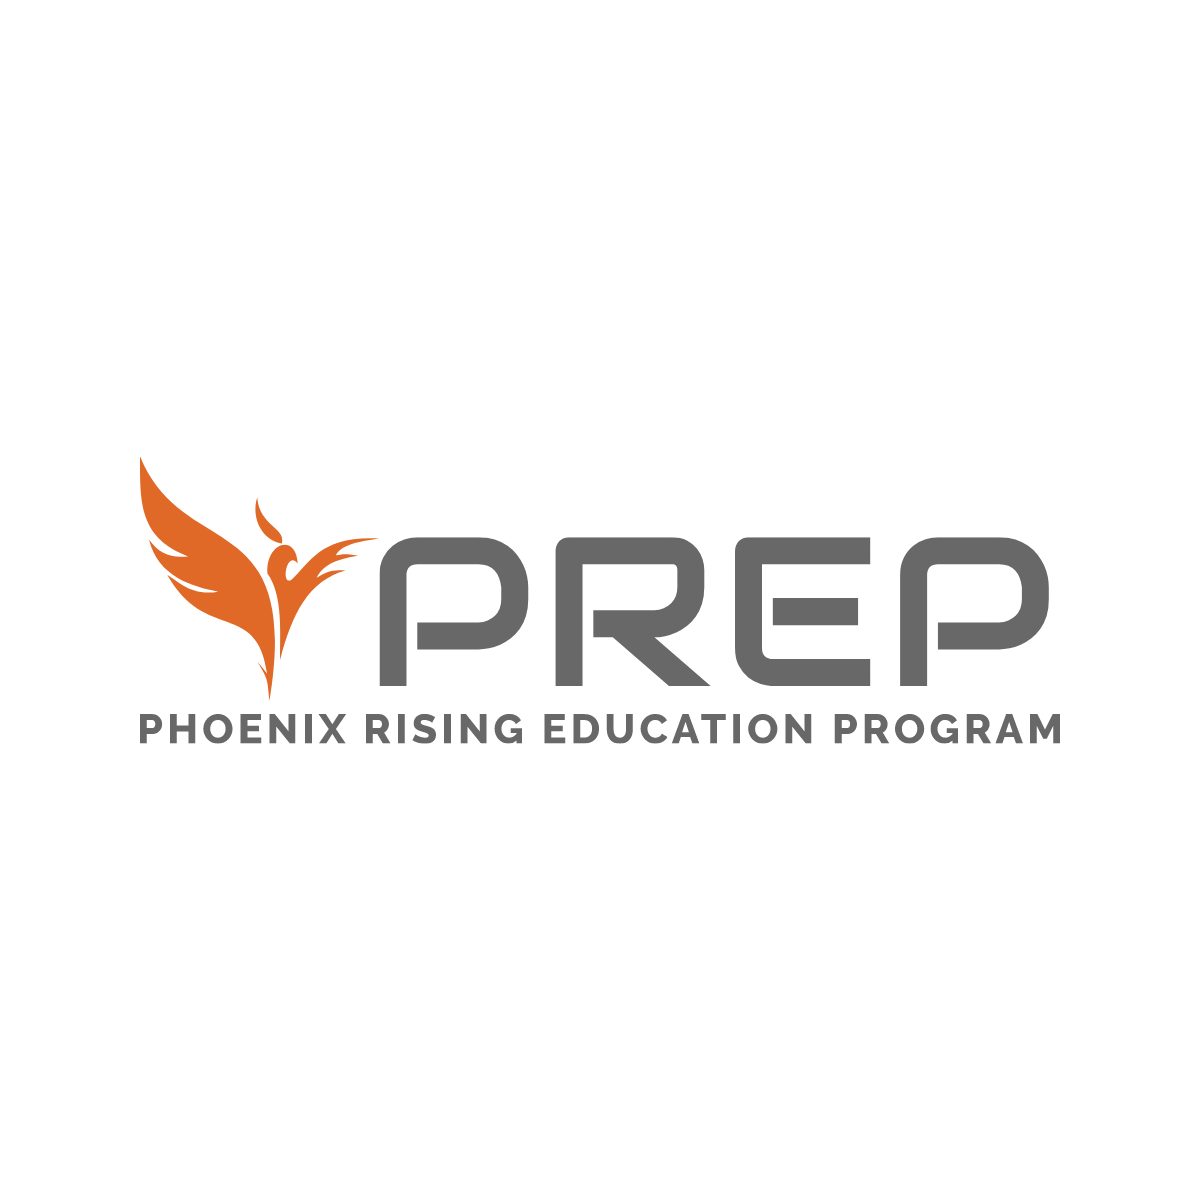 Phoenix Rising Education Program logo